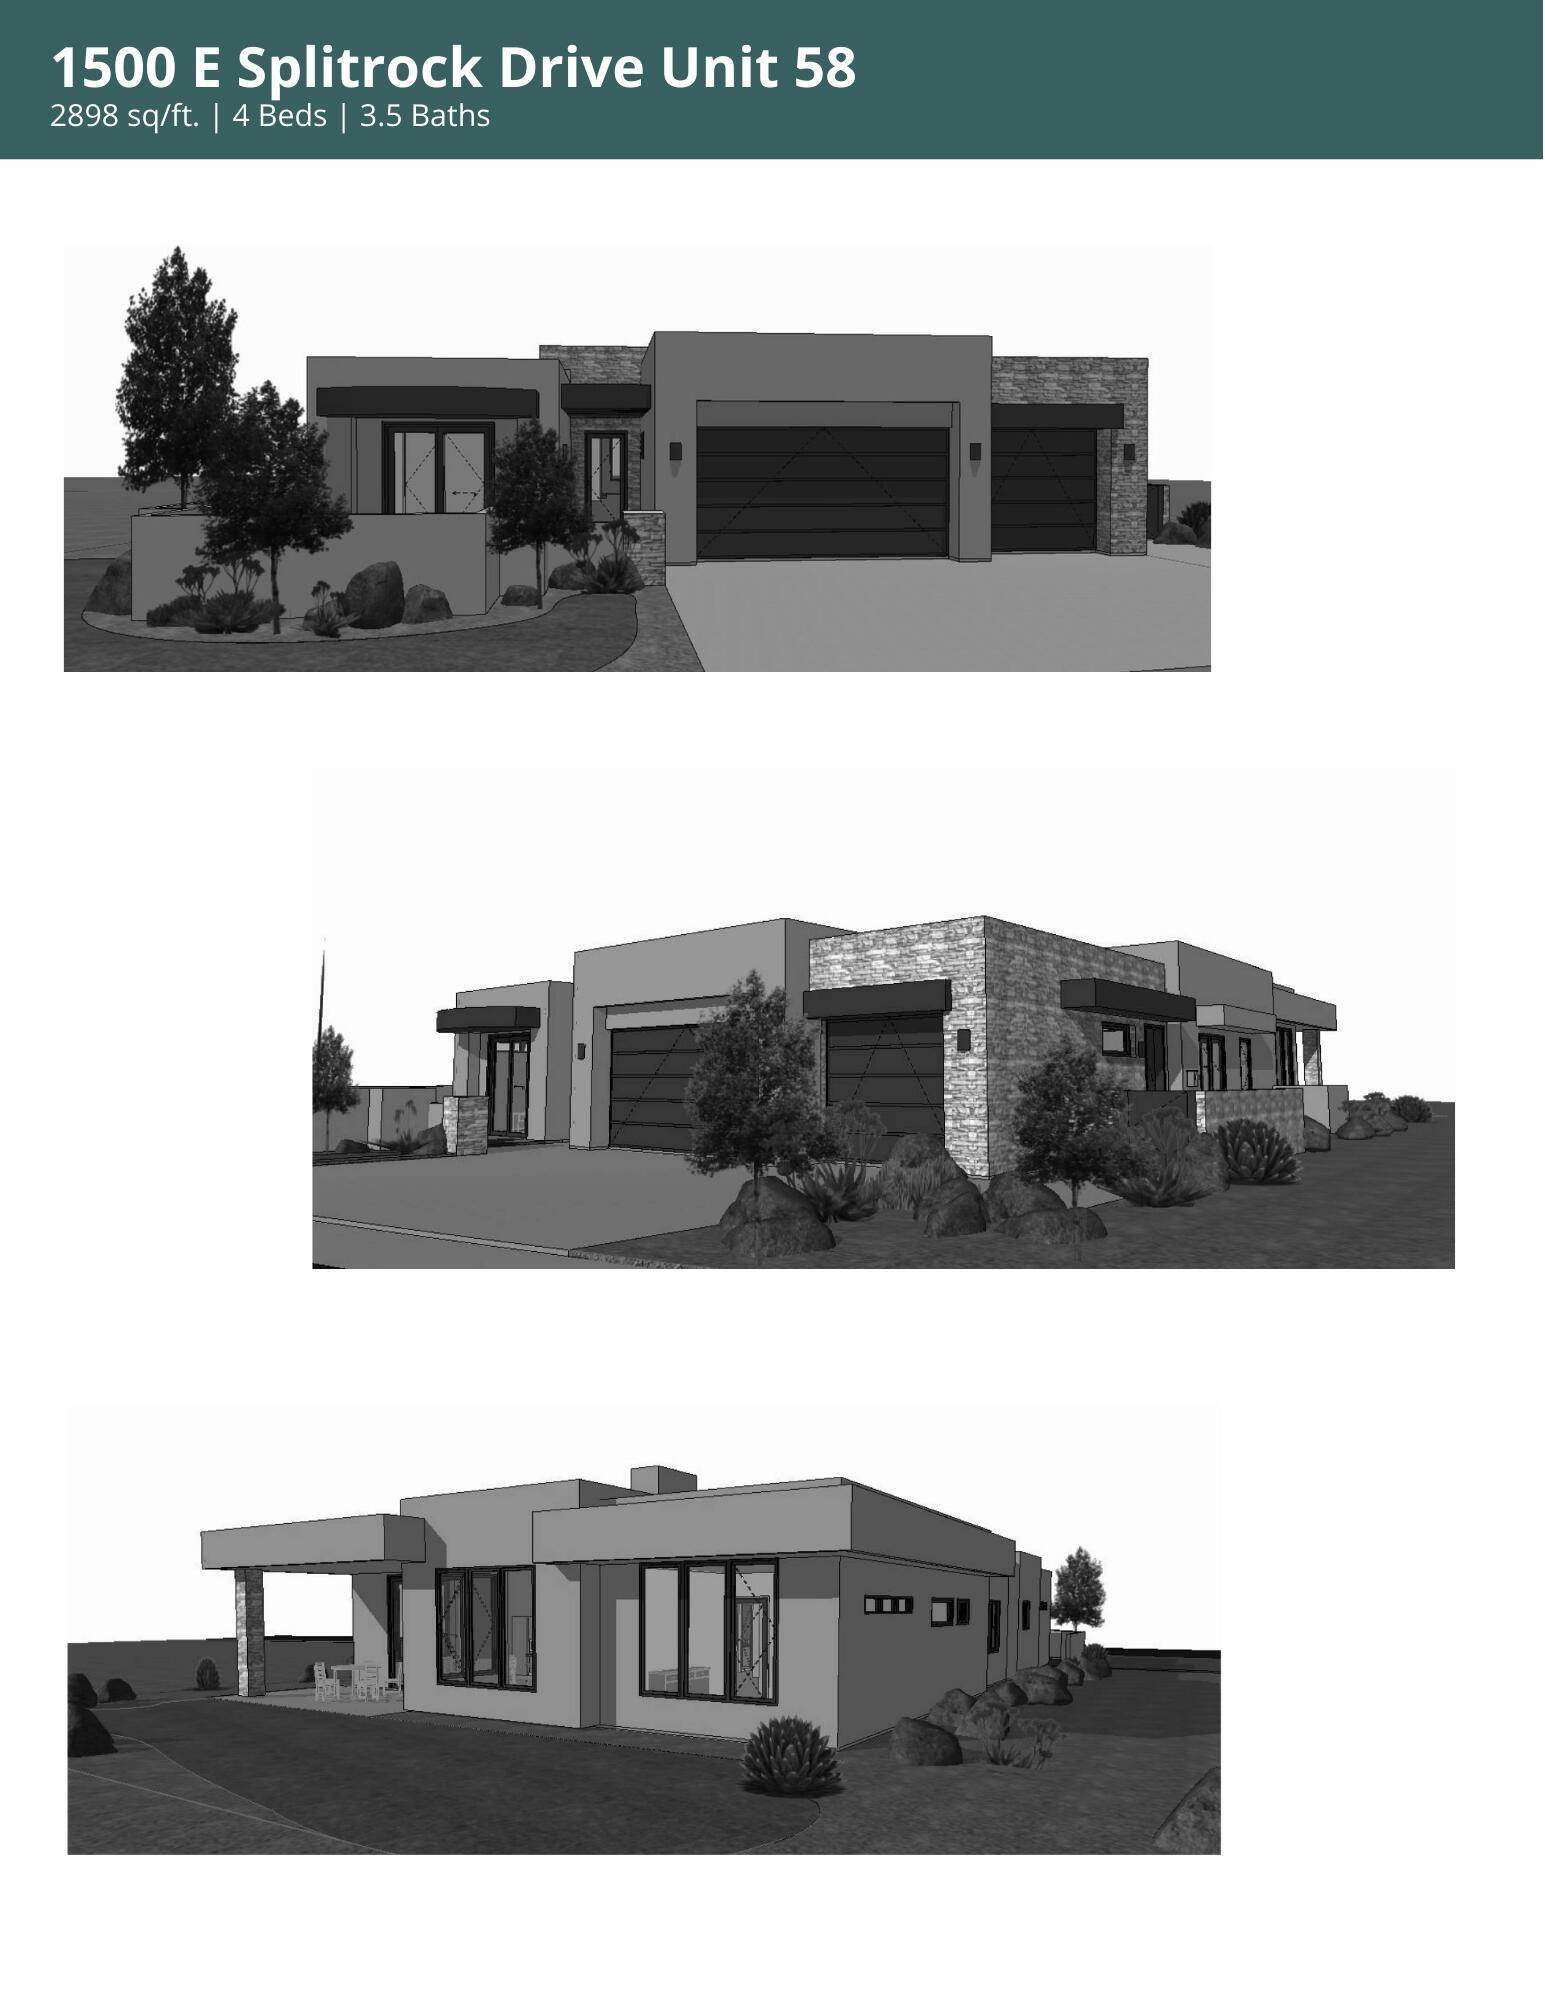 Single Family Homes for Sale at 1500 Splitrock Drive Unit Ivins, Utah 84738 United States